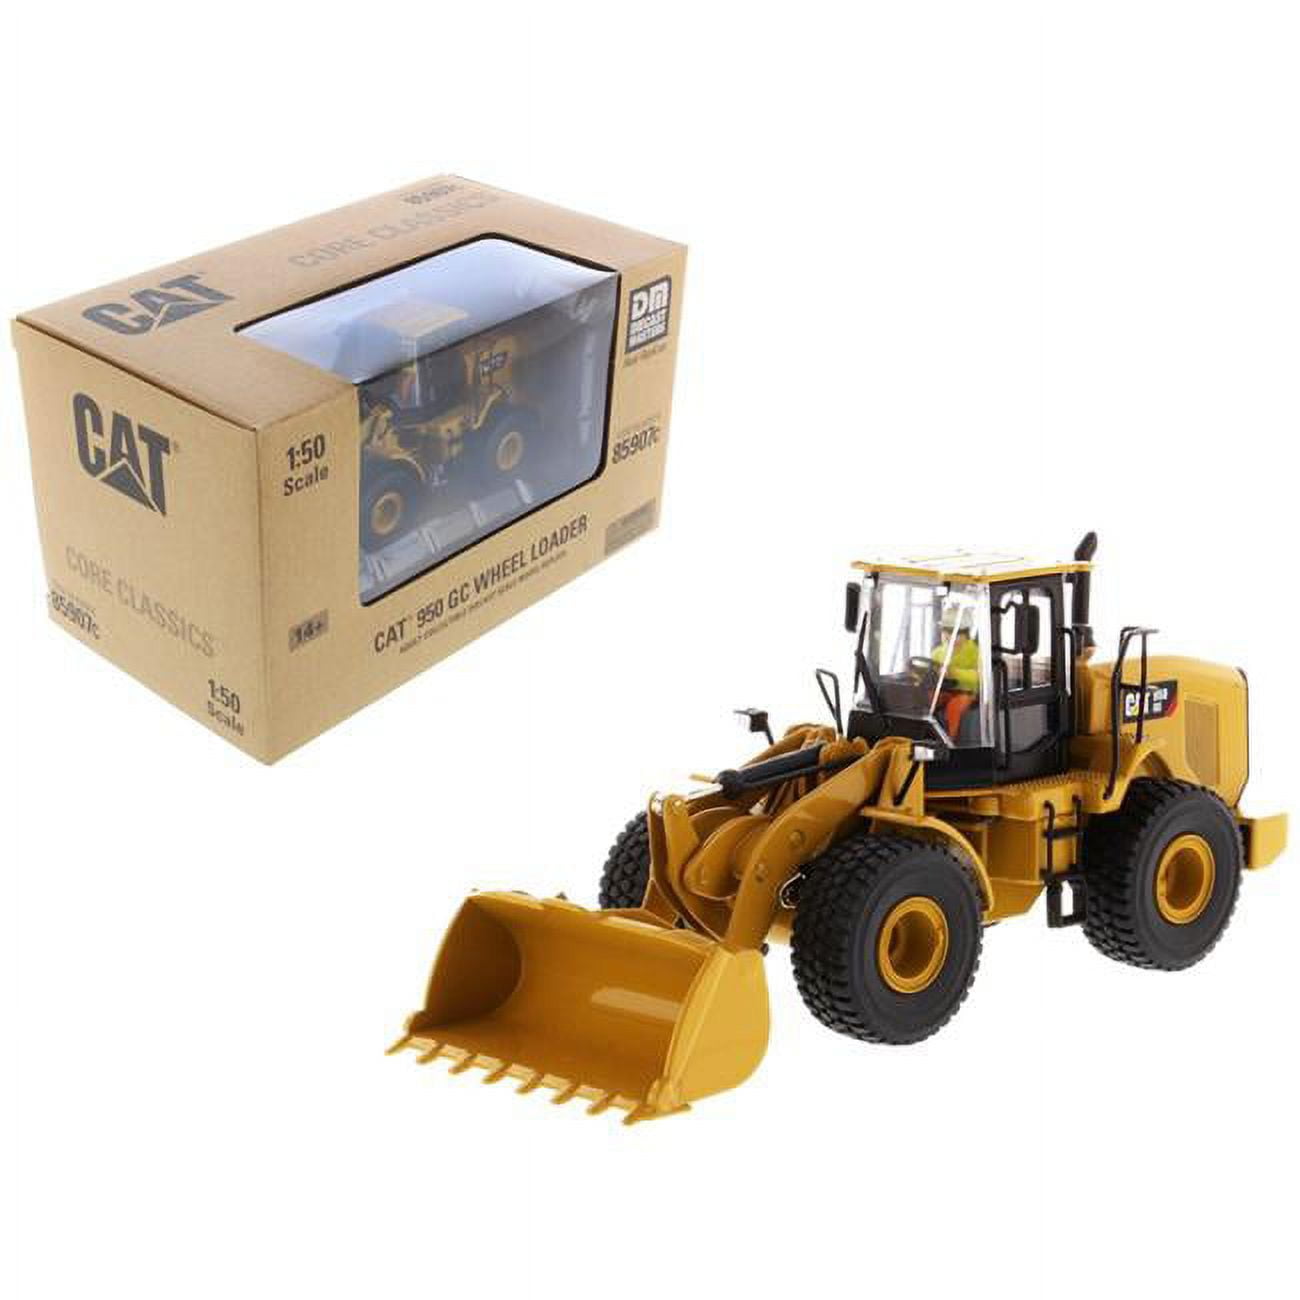 85907c Cat Caterpillar 950 Gc Wheel Loader With Operator Core Classics Series 1-50 Diecast Model